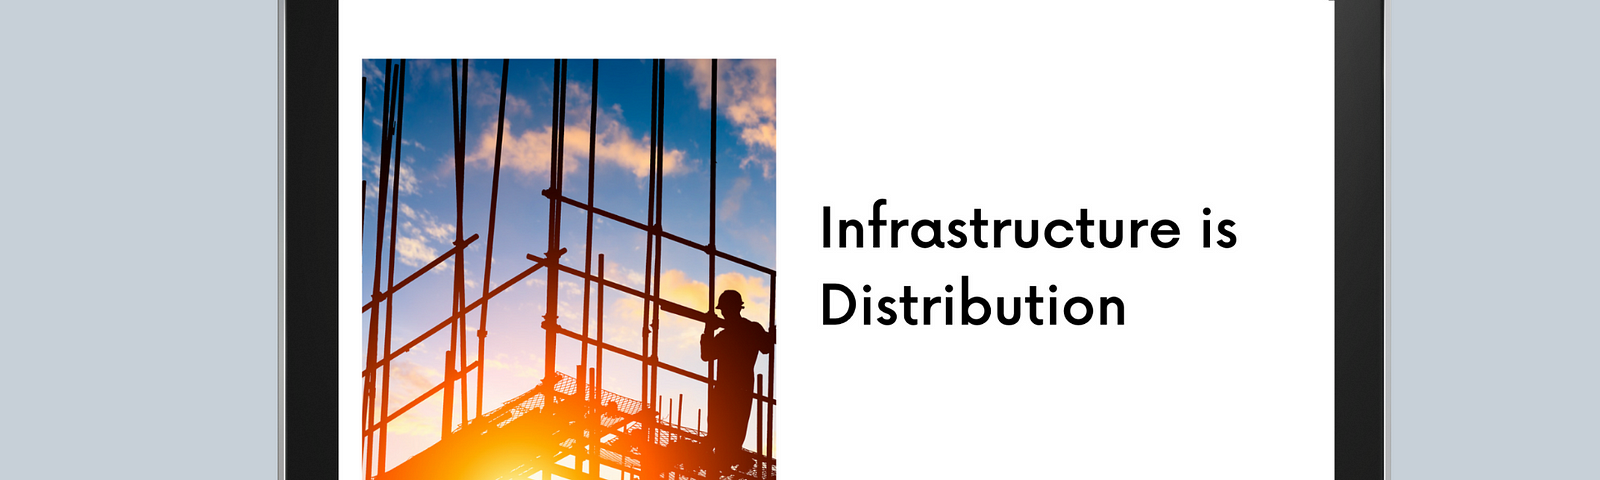 Infrastructure is Distribution header image